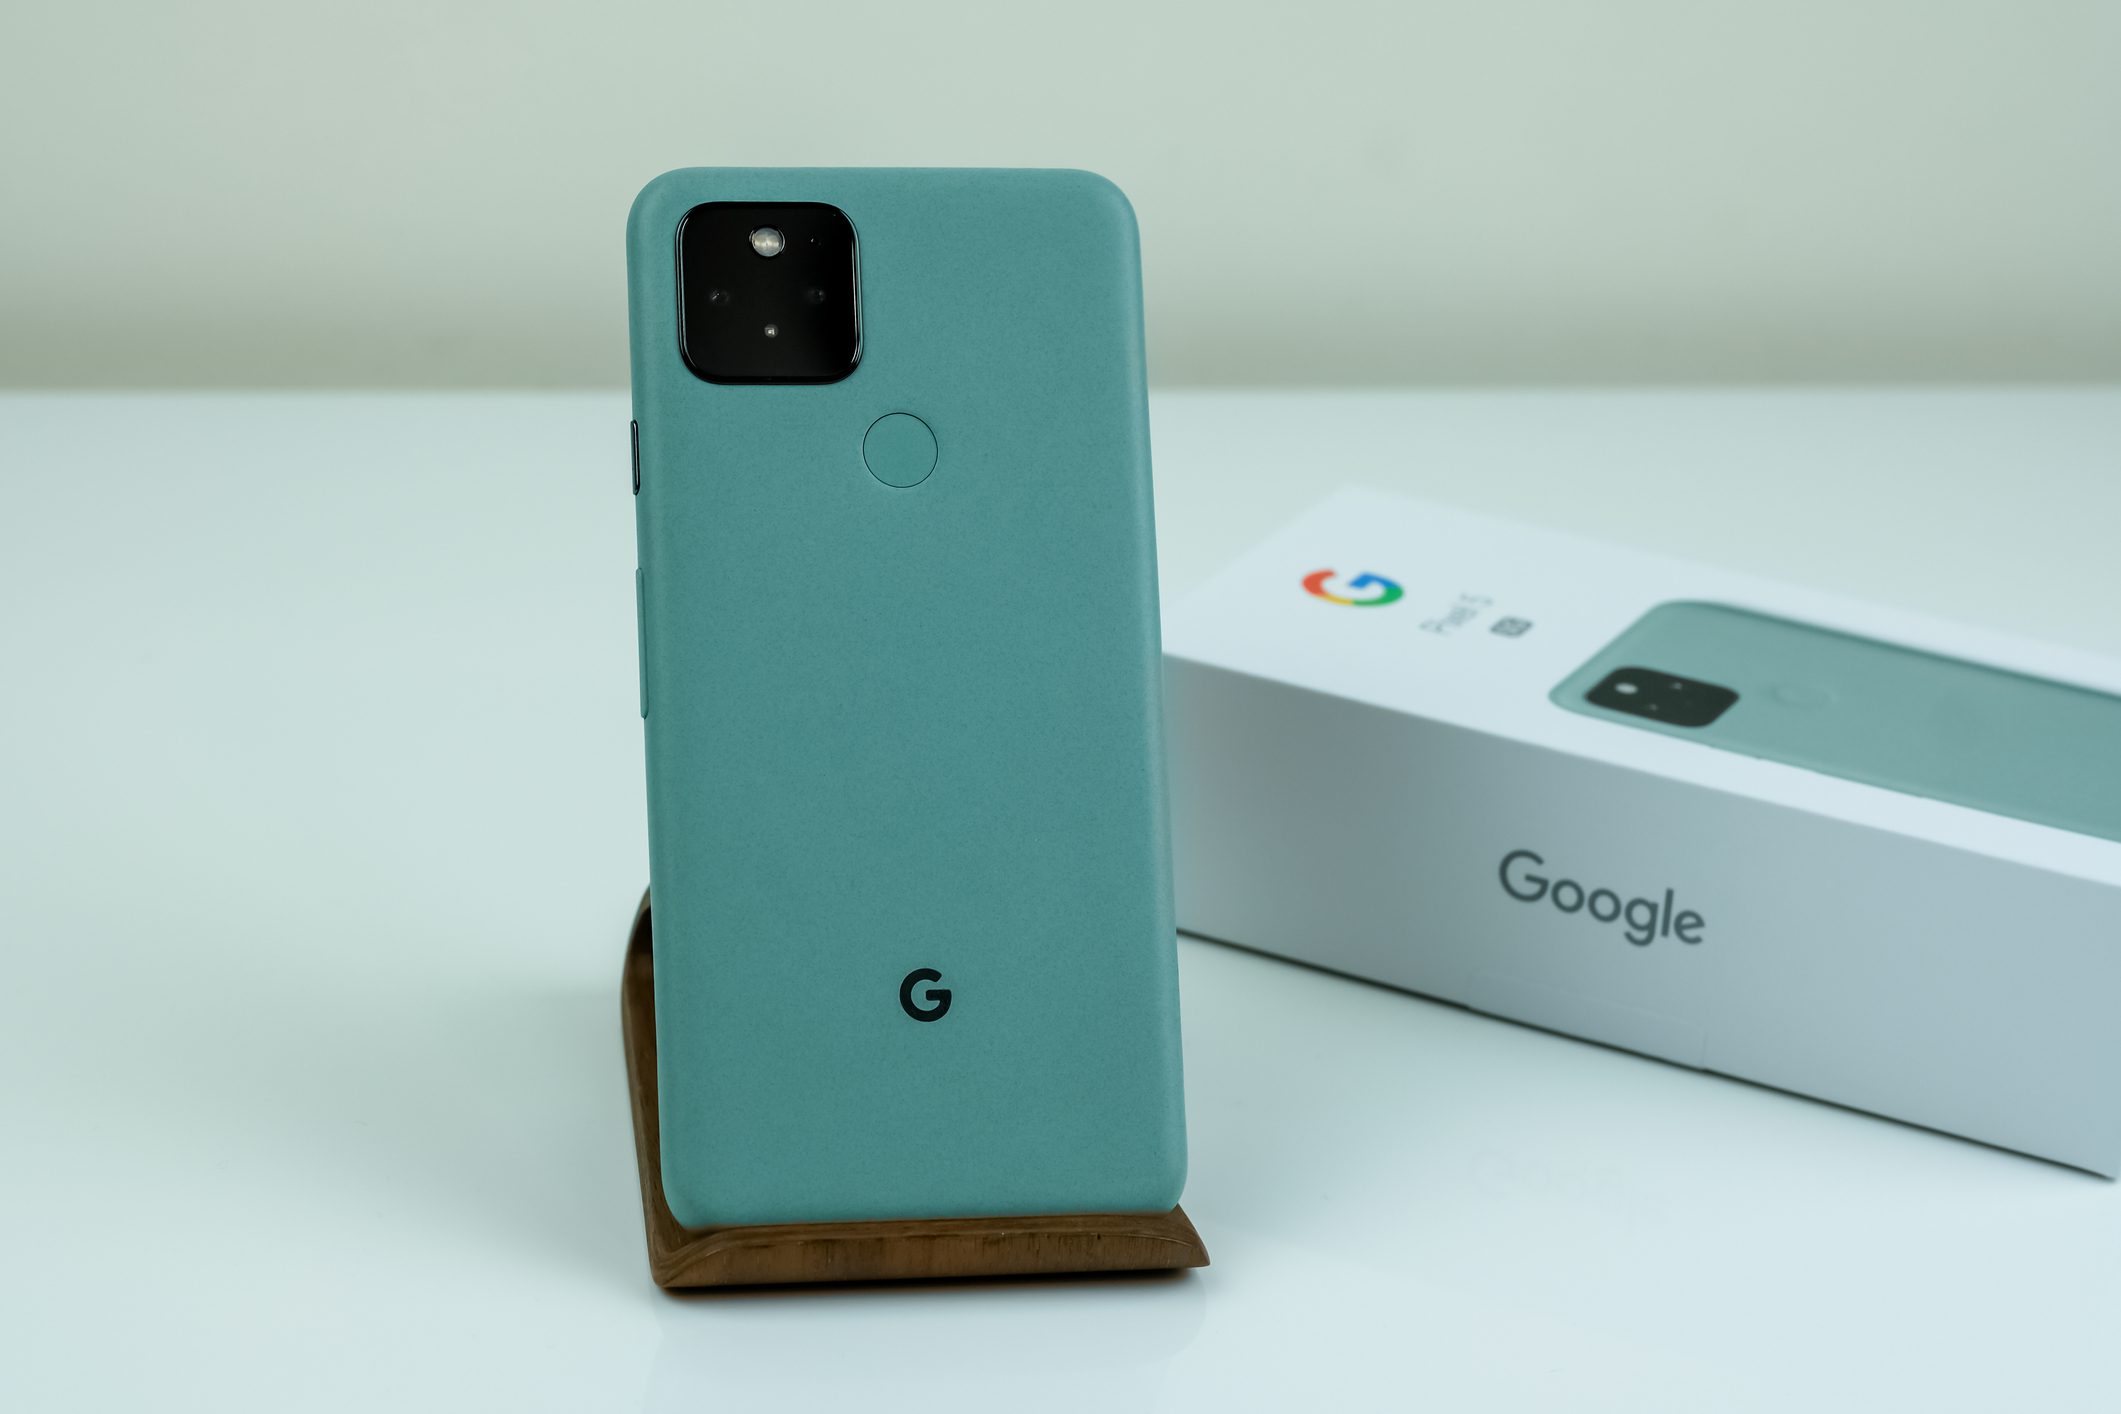 Google Pixel 5 in Sorta Sage color